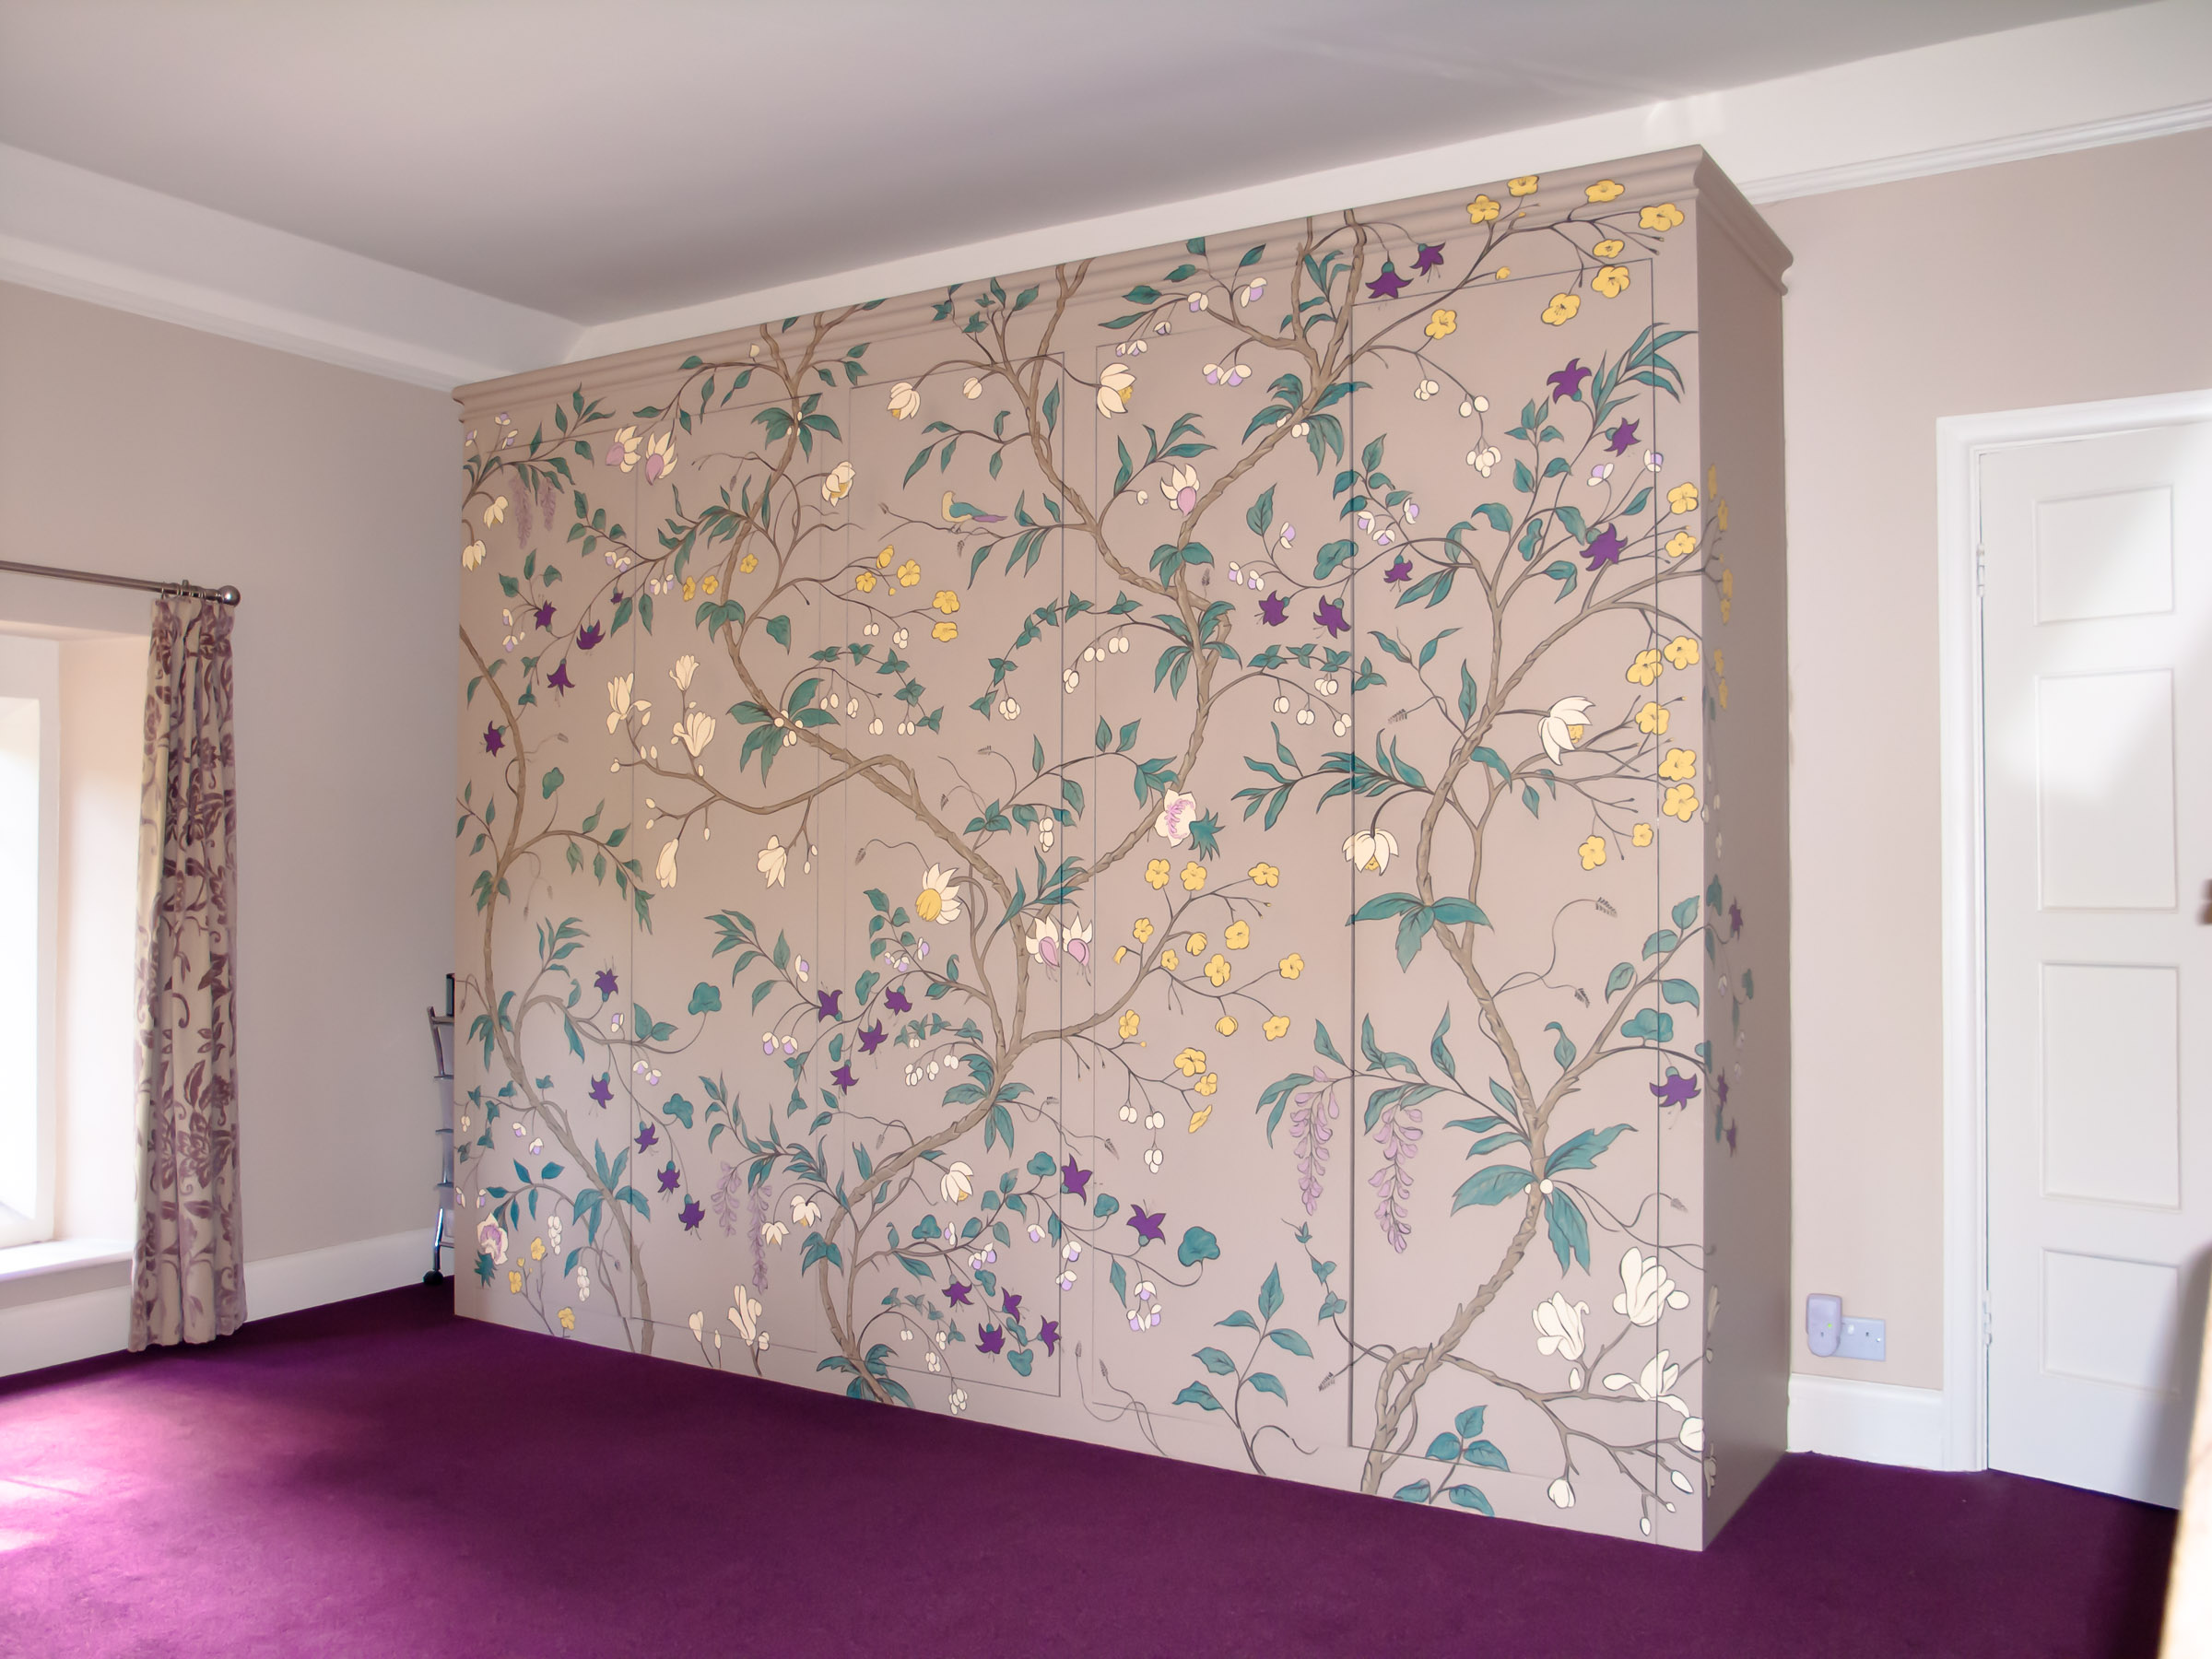 Bespoke wardrobe with bespoke floral design artwork